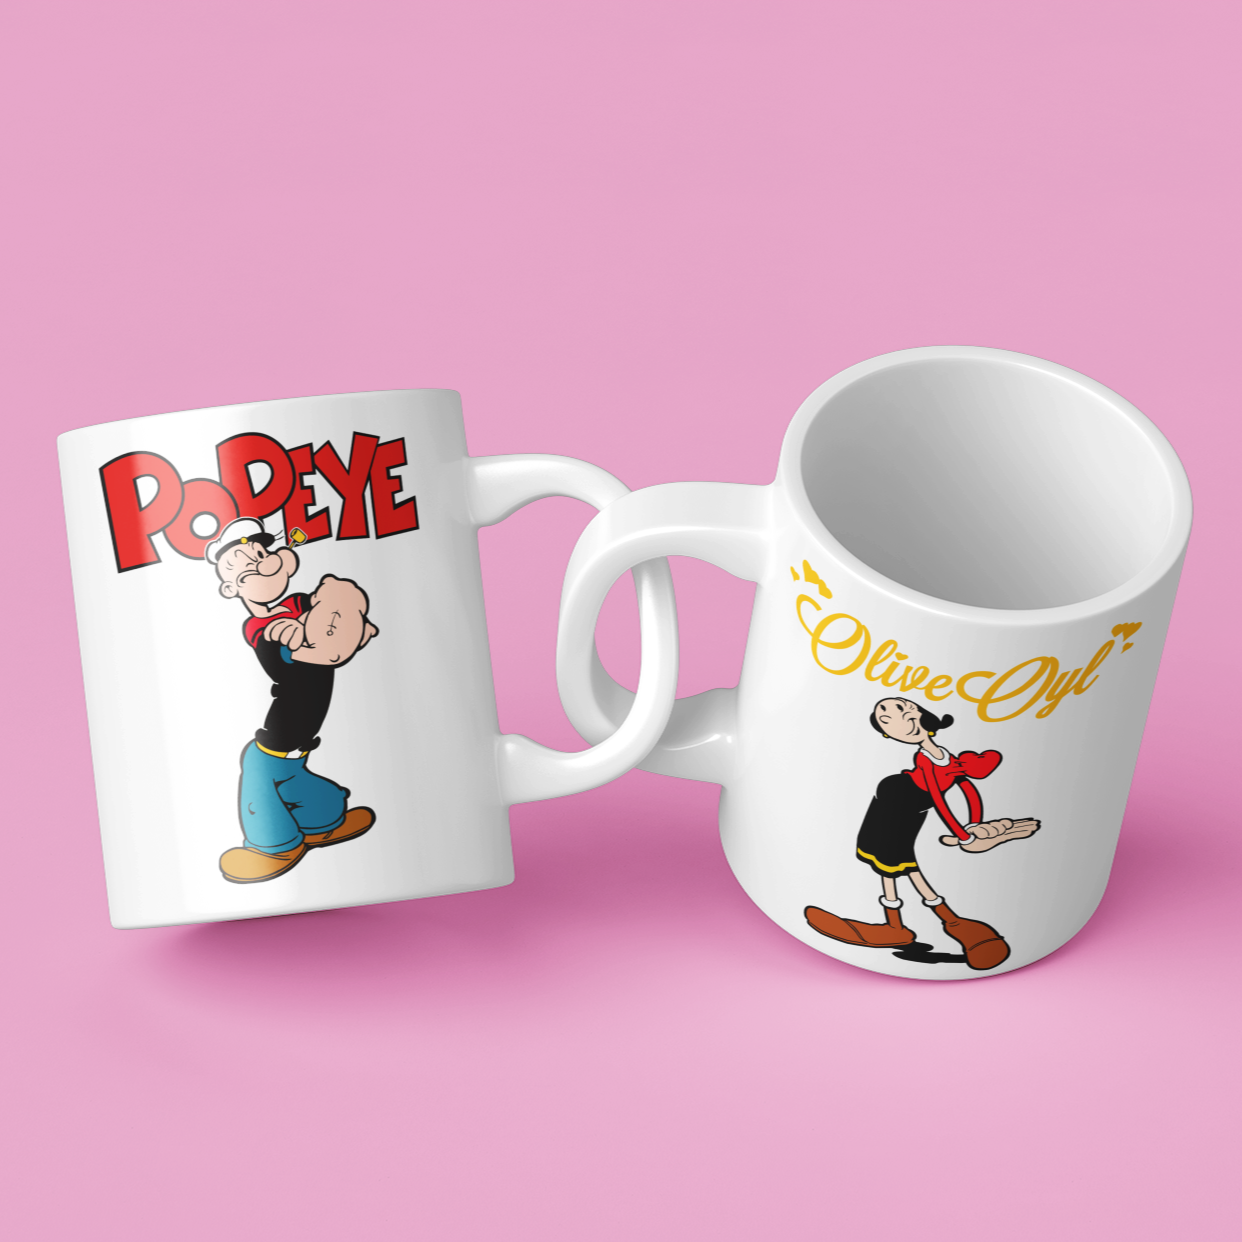 Popeye and Olive Oyl Mug Couples Mug Set Wedding Mug Couples Gift Set